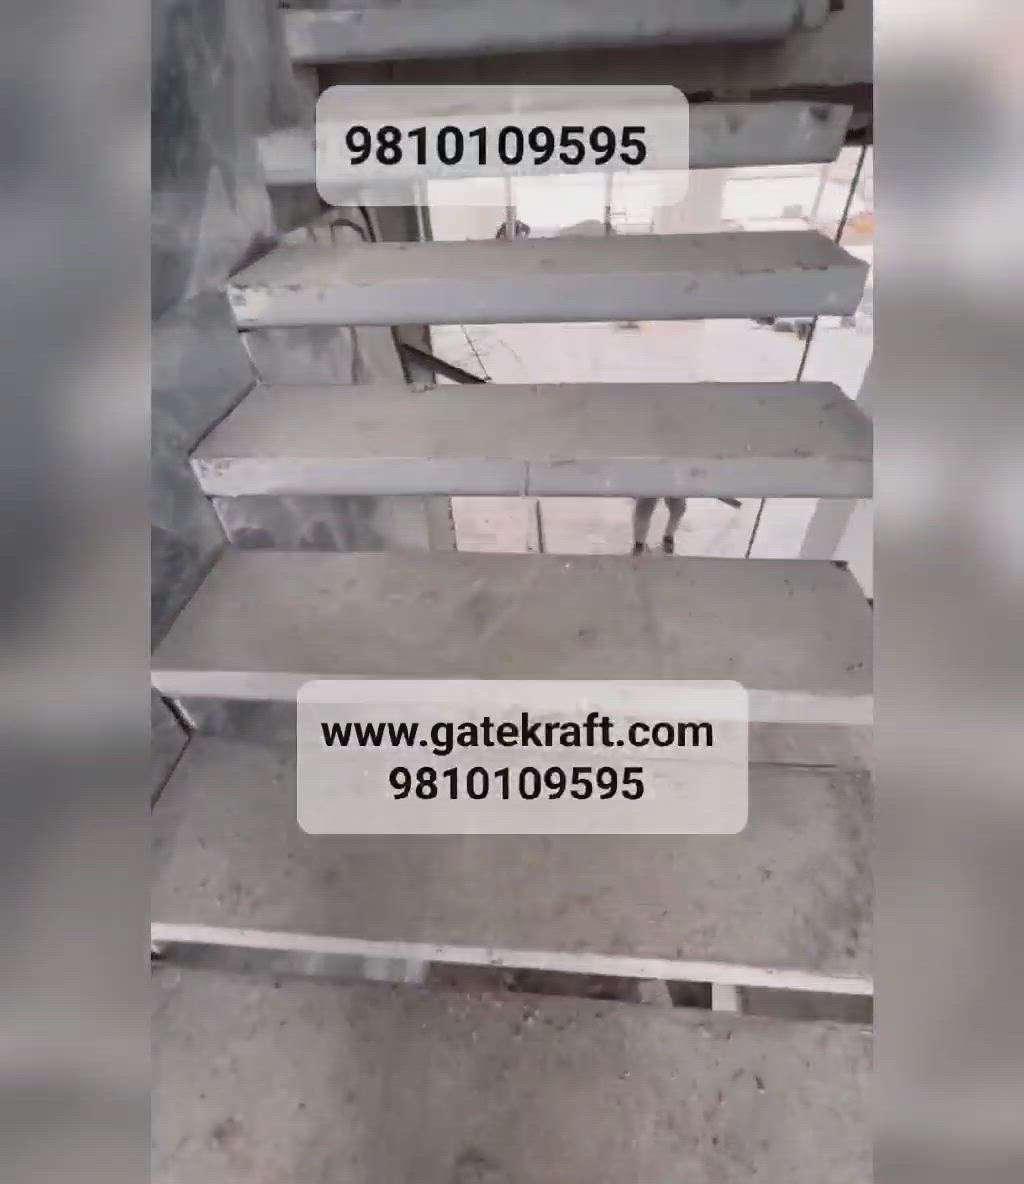 Staircase Designs by Fabrication & Welding Gate kraft, Delhi | Kolo